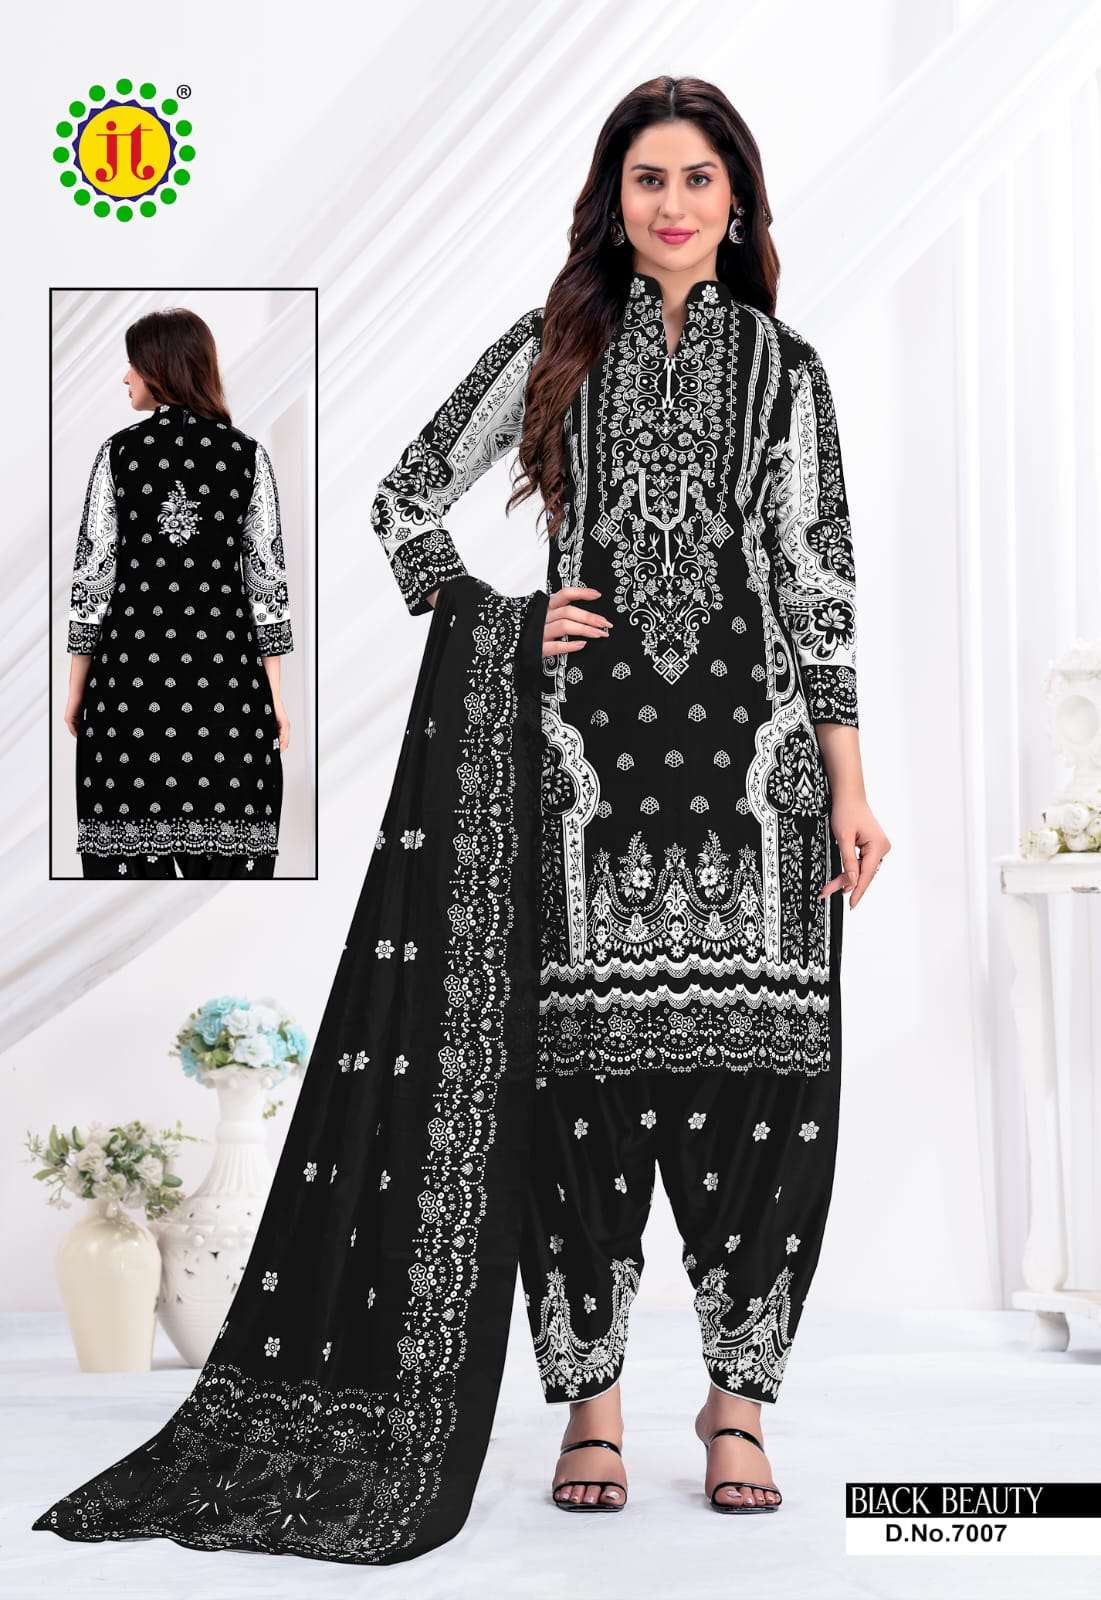 jamatmal tilokchand black beauty vol-7 7001-7010 series fancy designer salwar kameez catalogue wholesale price surat